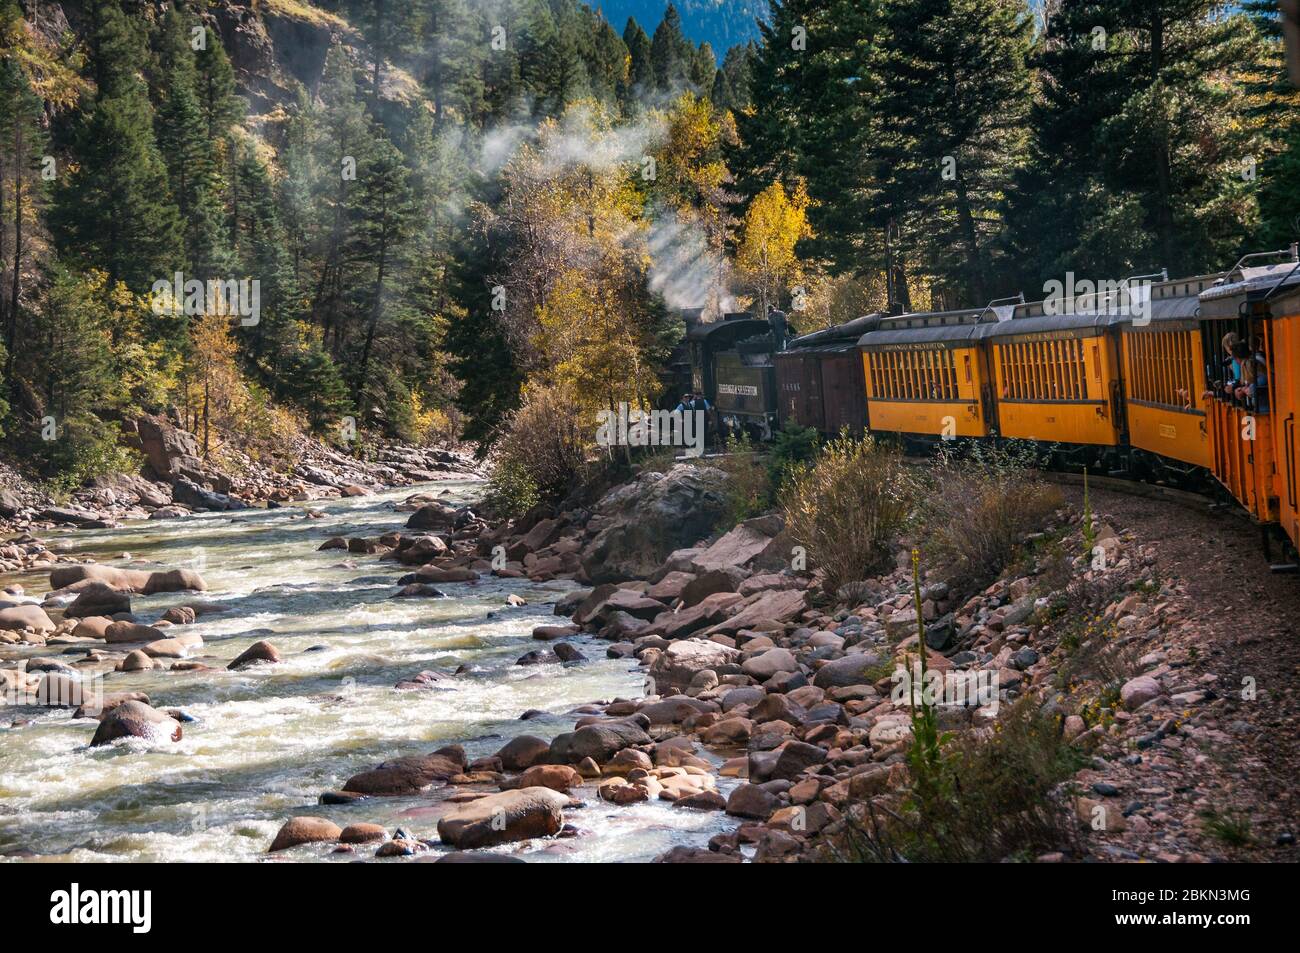 K-36 class no. 486 taking on water by the Animas River on the Durango & Silverton Narrow Gauge Railroad, Colorado, USA. Stock Photo